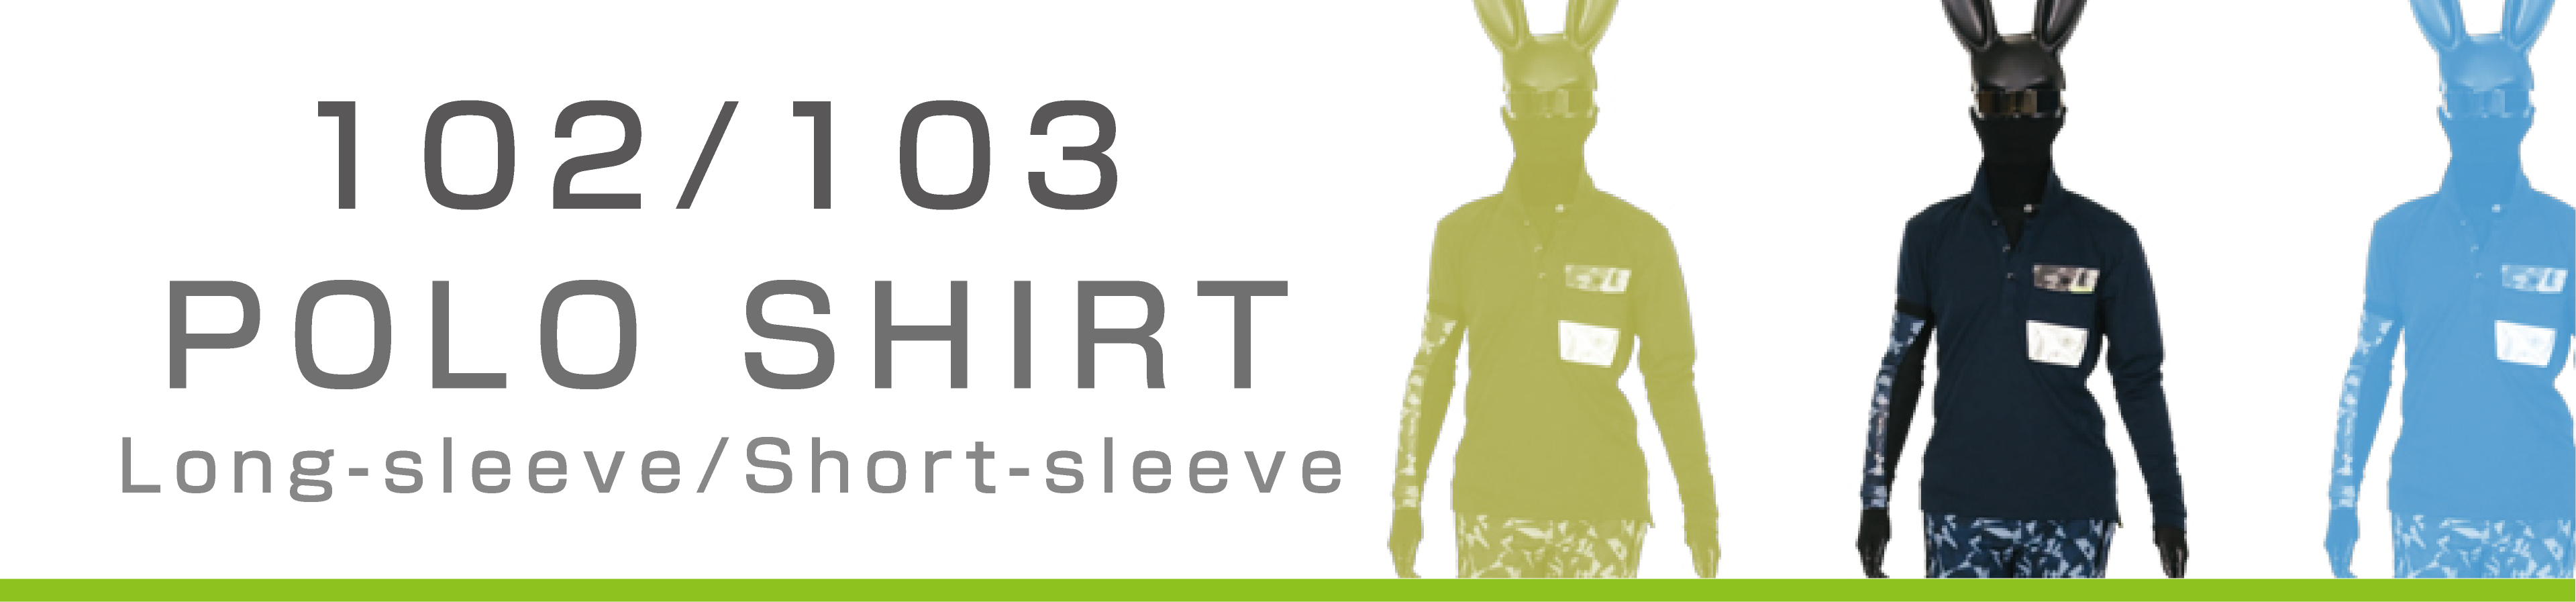 102/103 Polo Shirt Long-sleeve/Short-sleeve